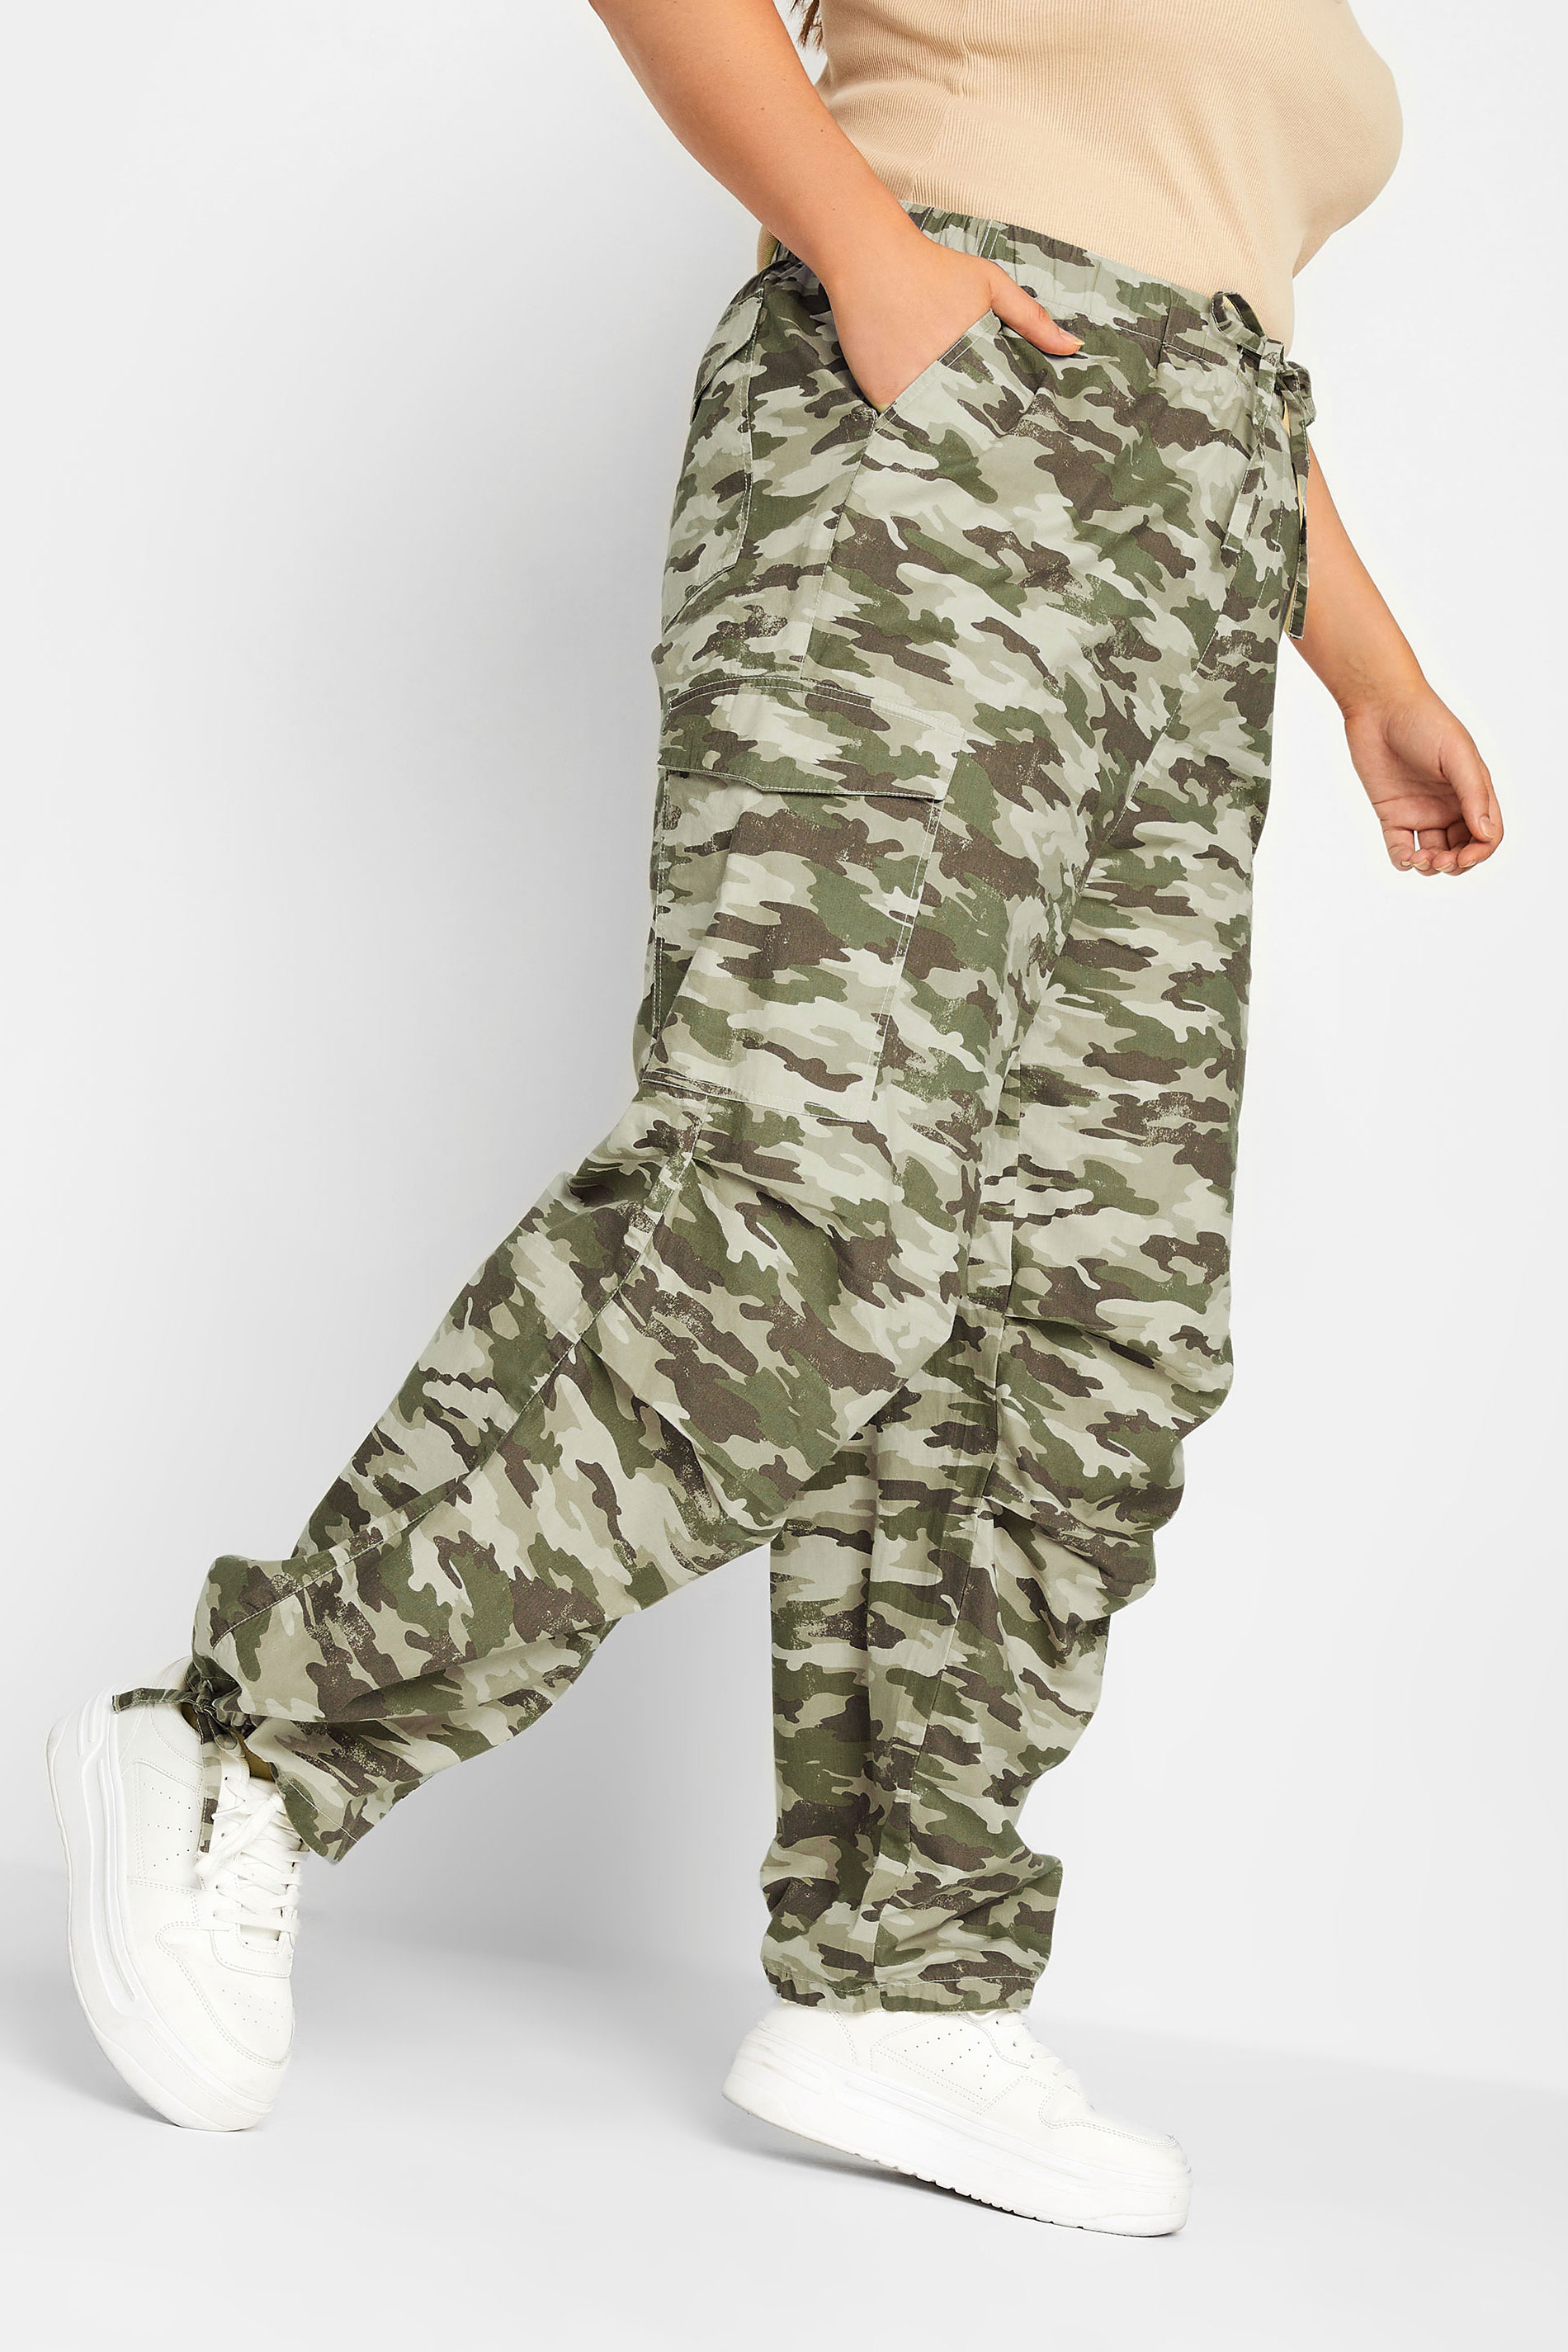 Alfabet Frugtgrøntsager udsultet YOURS Curve Plus Size Green Camo Print Cargo Parachute Trousers | Yours  Clothing